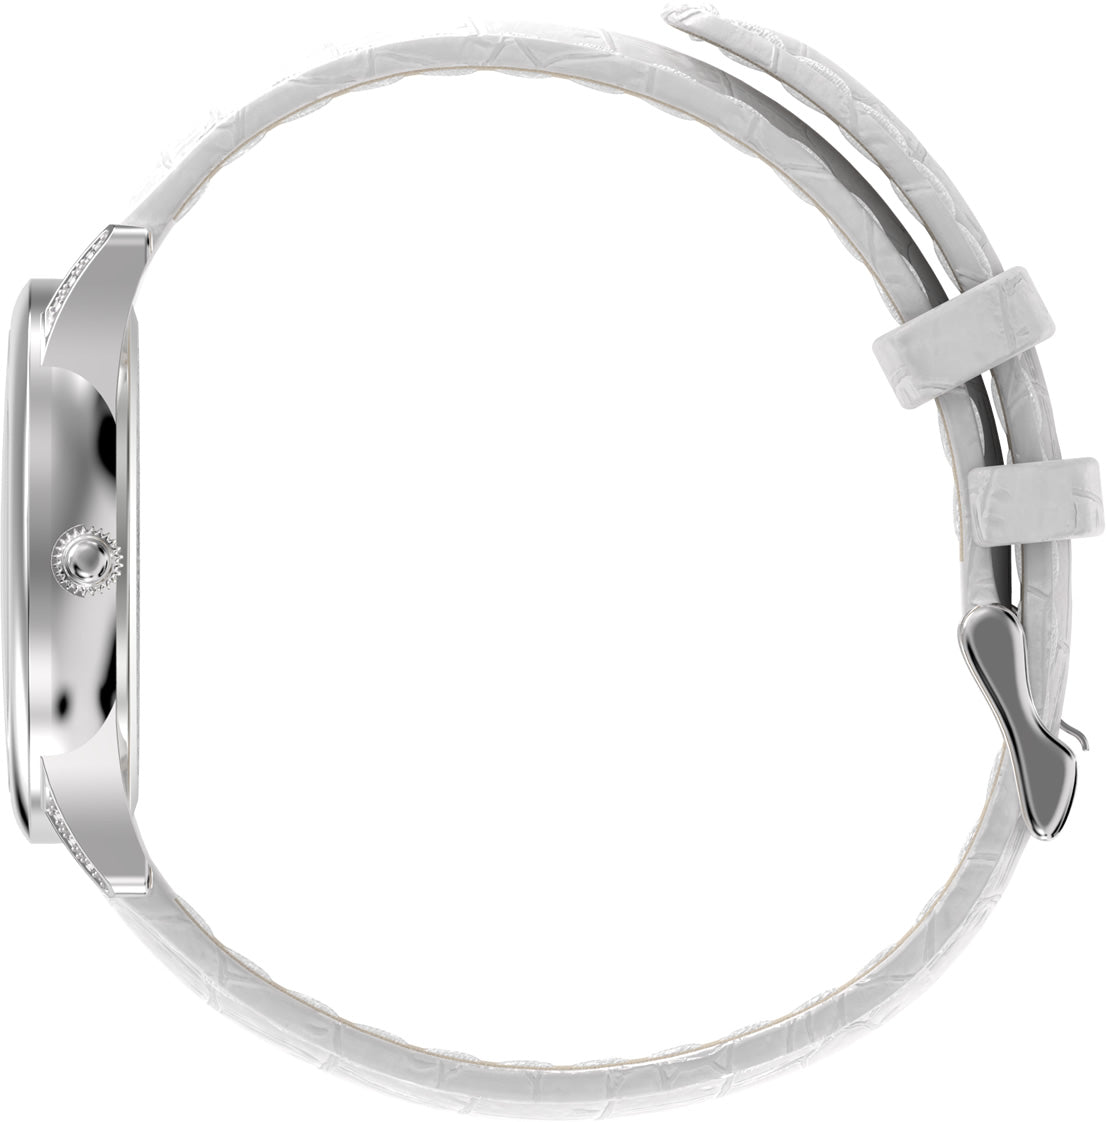 SERENE MARCEAU S009.01 PONS DES ARTS 32mm White dial Ladies Diamond watch 😉